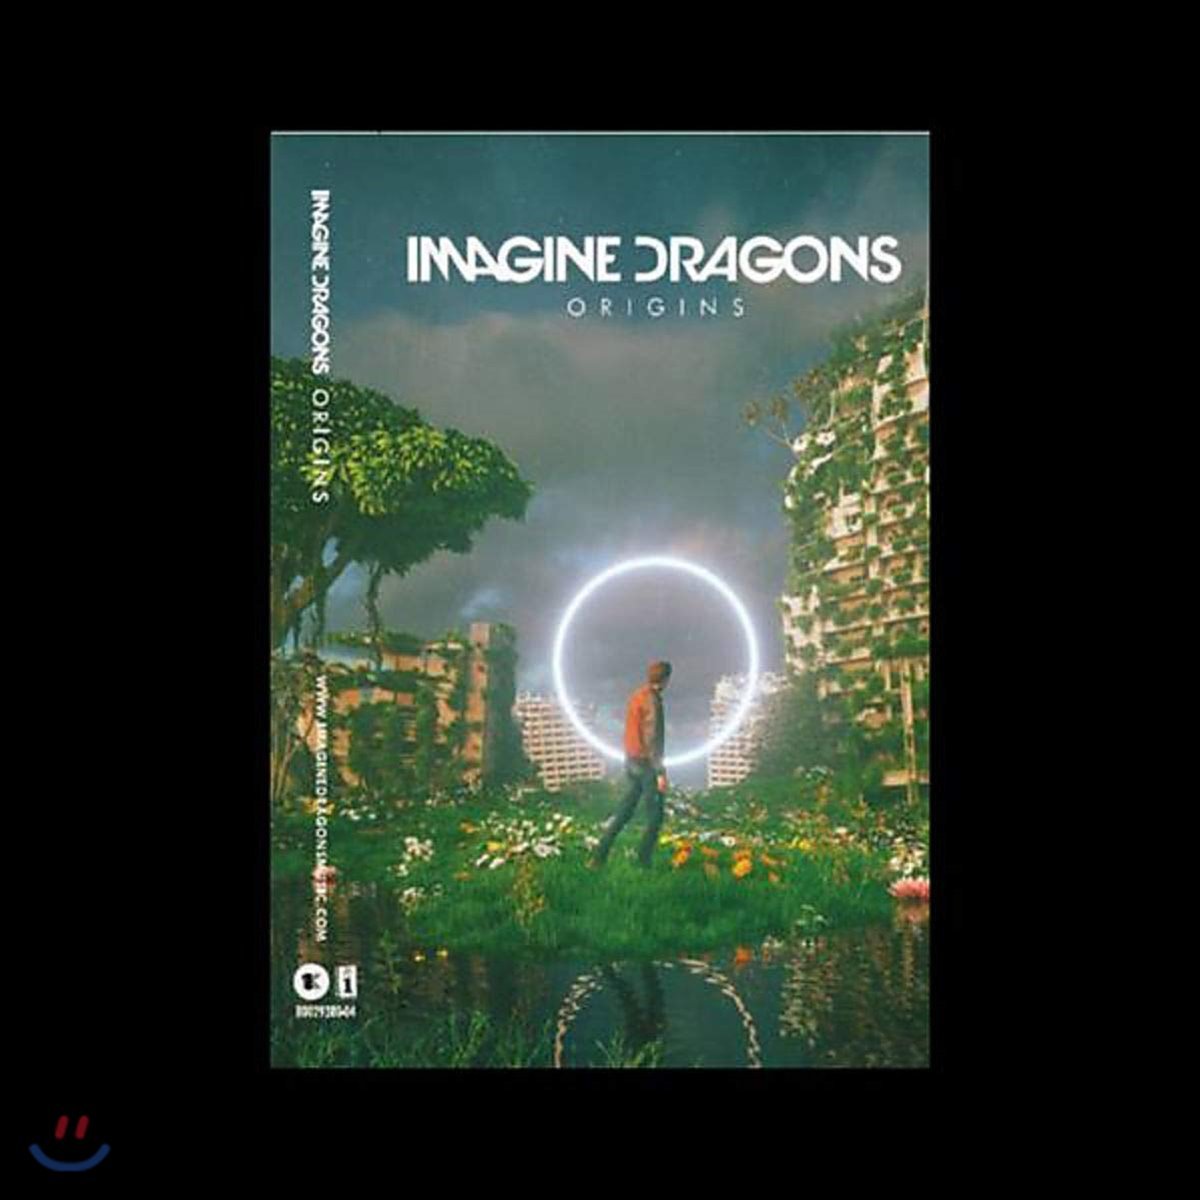 Imagine Dragons (이매진 드래곤스) - Origins